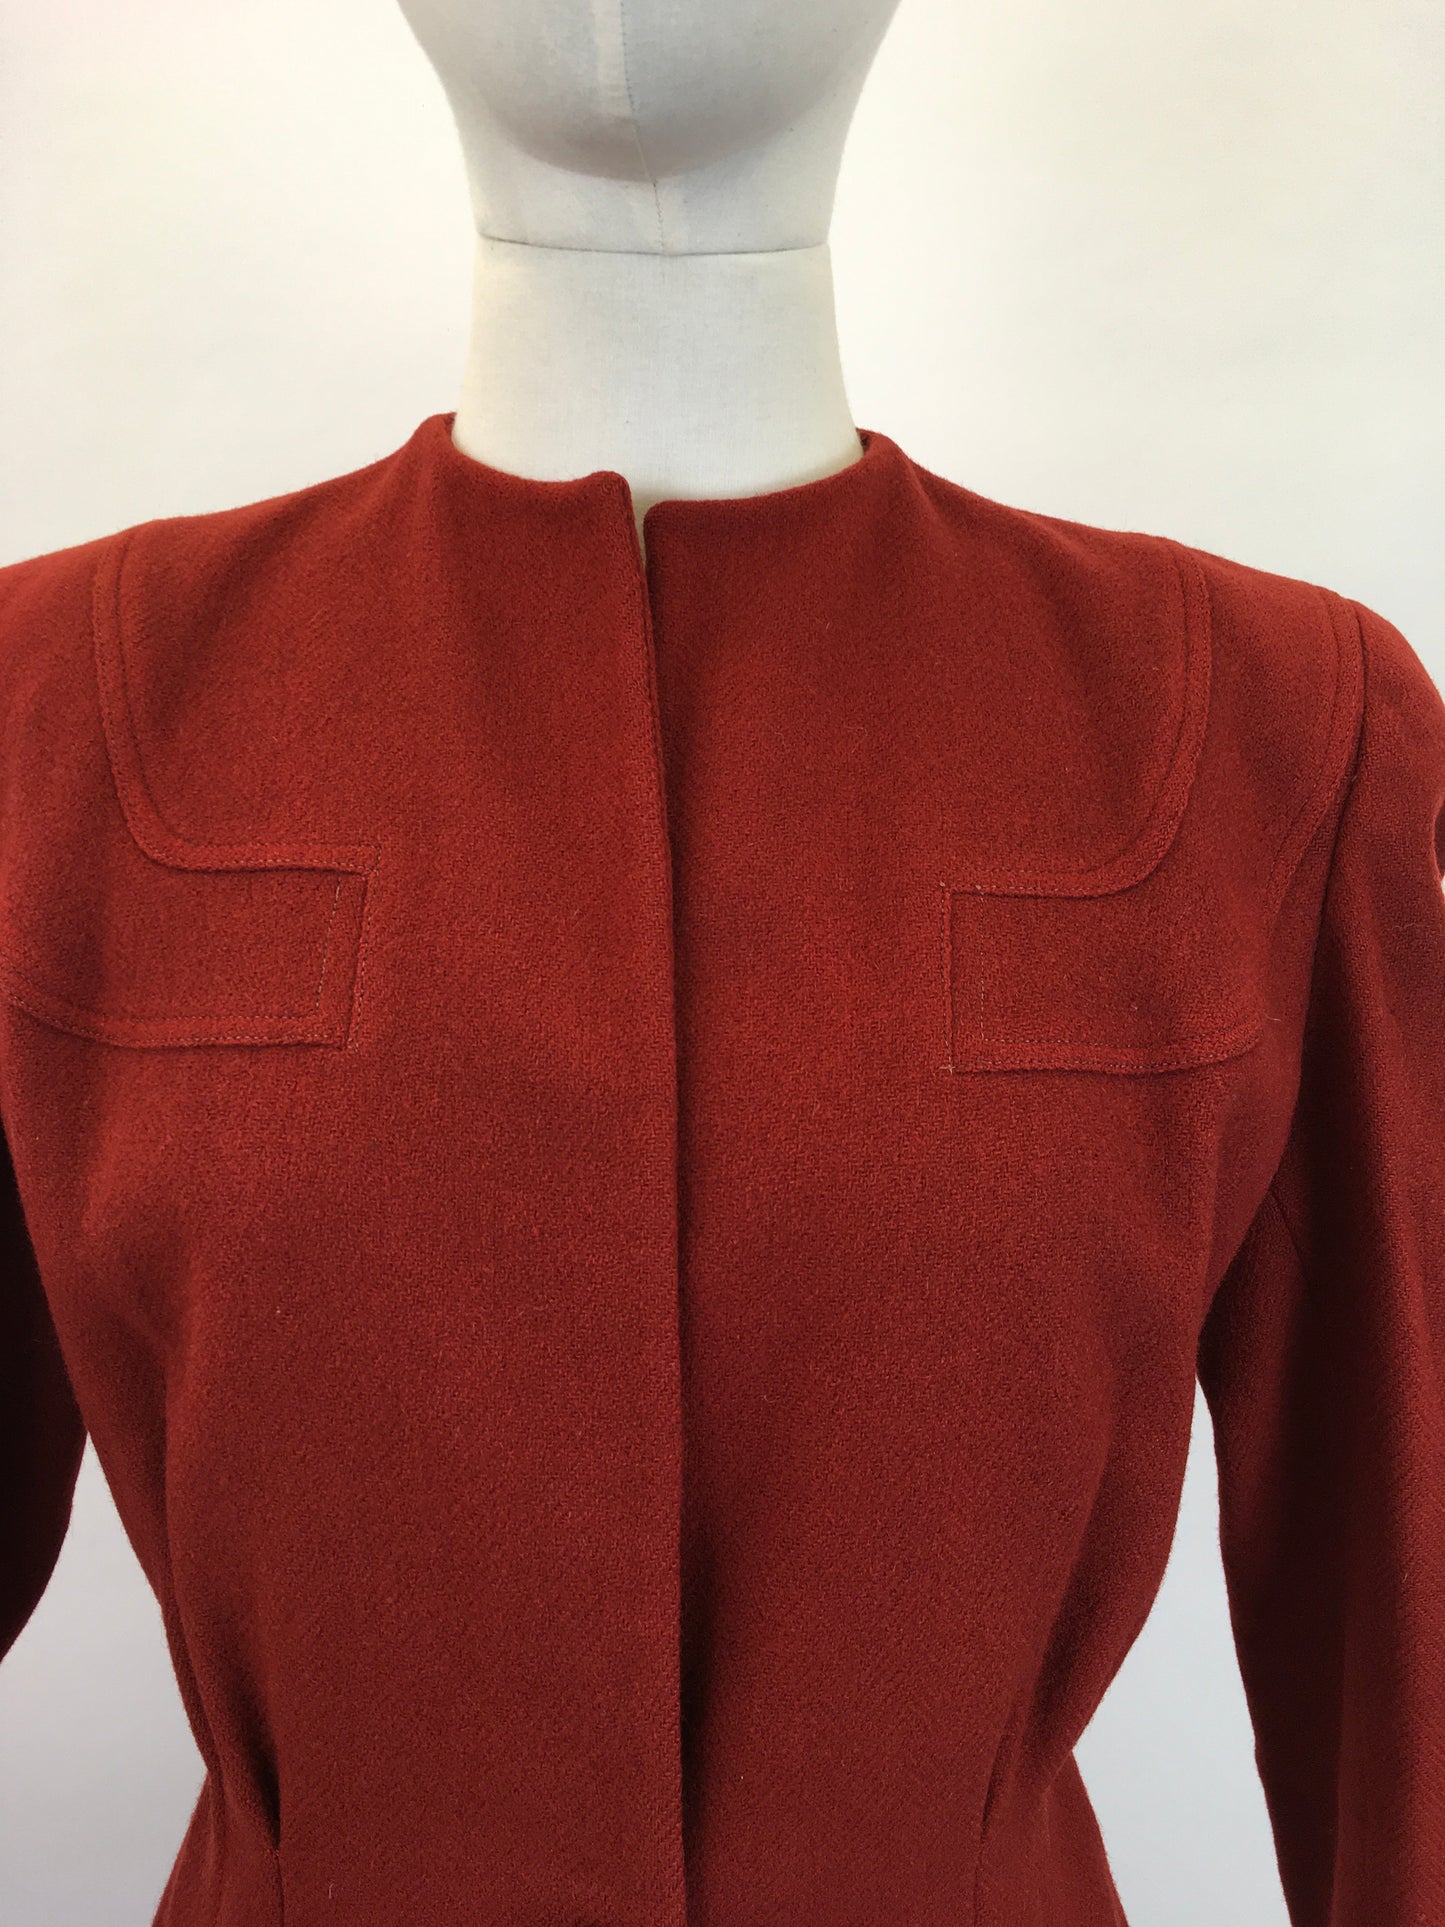 Original 1940's Sensational American Wool 2pc Suit - In A Warm Rust